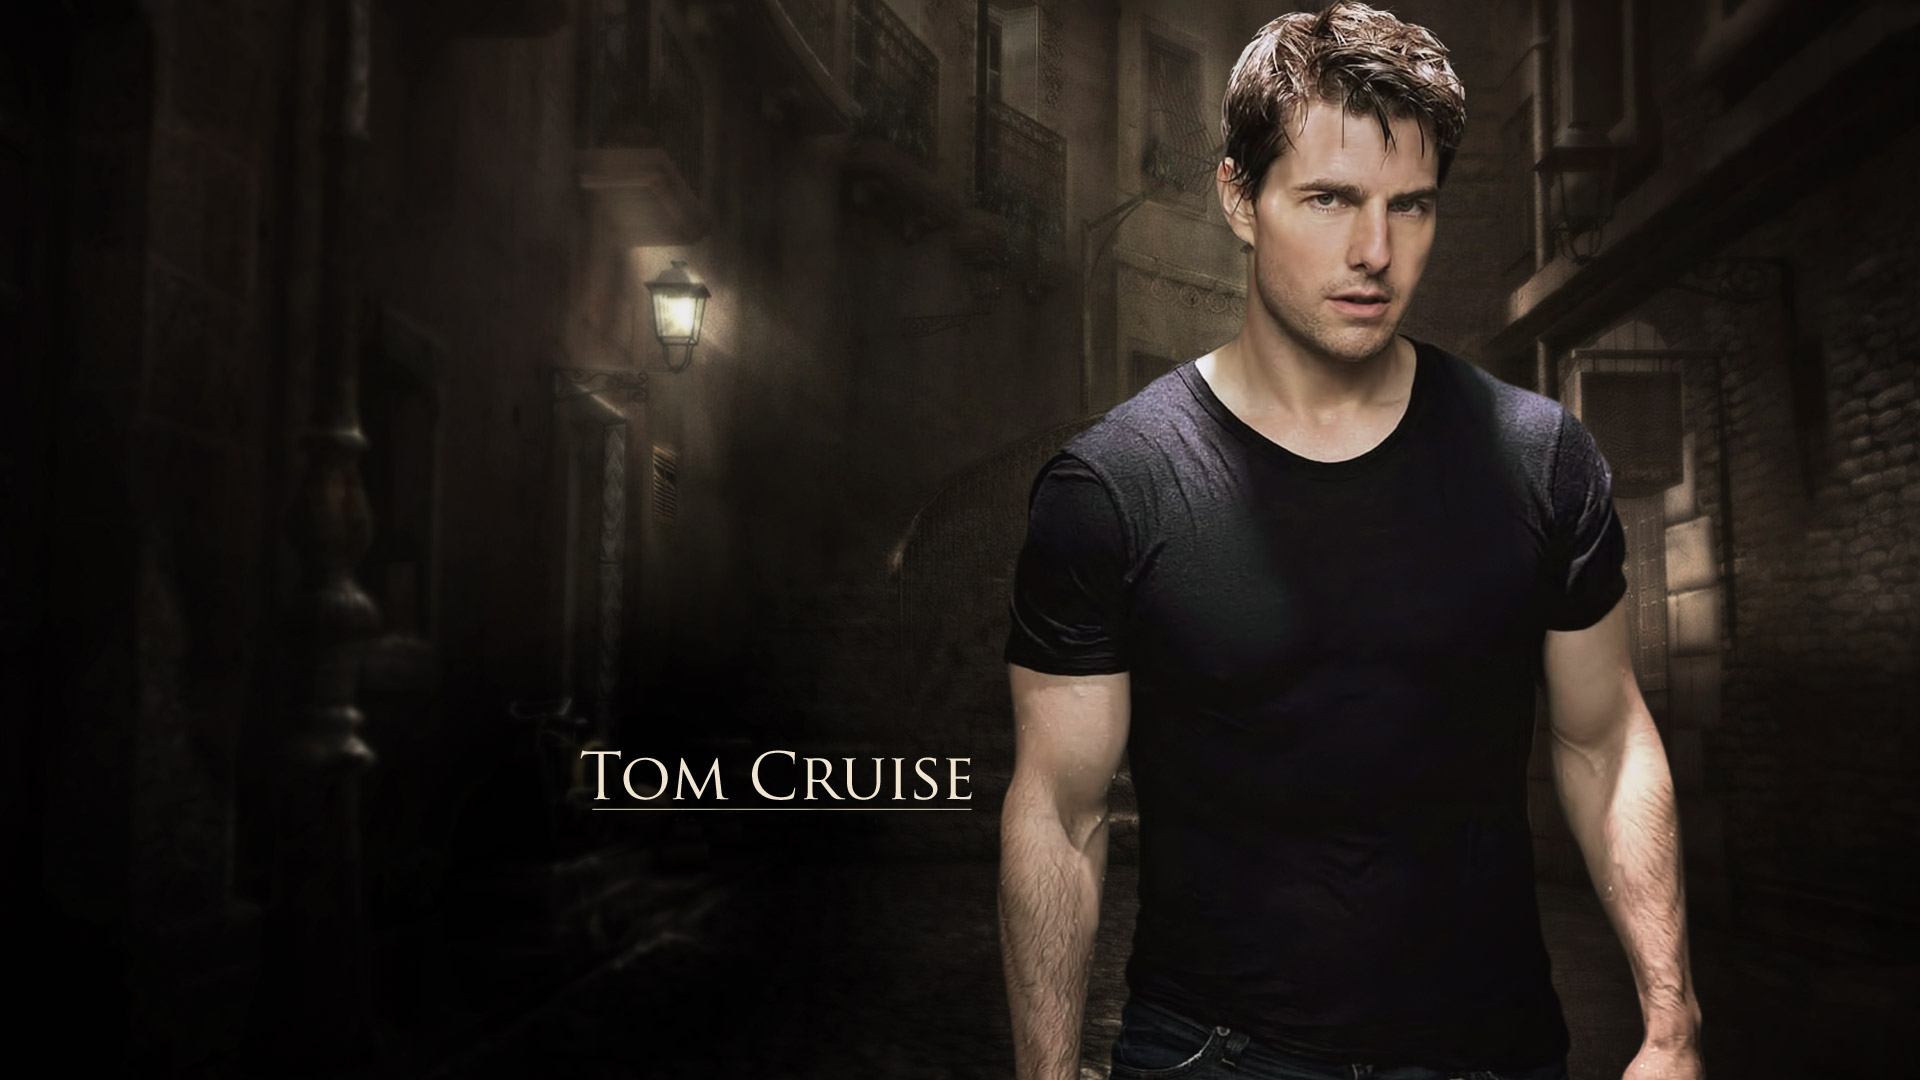 Tom Cruise Image Wallpaper Qulari